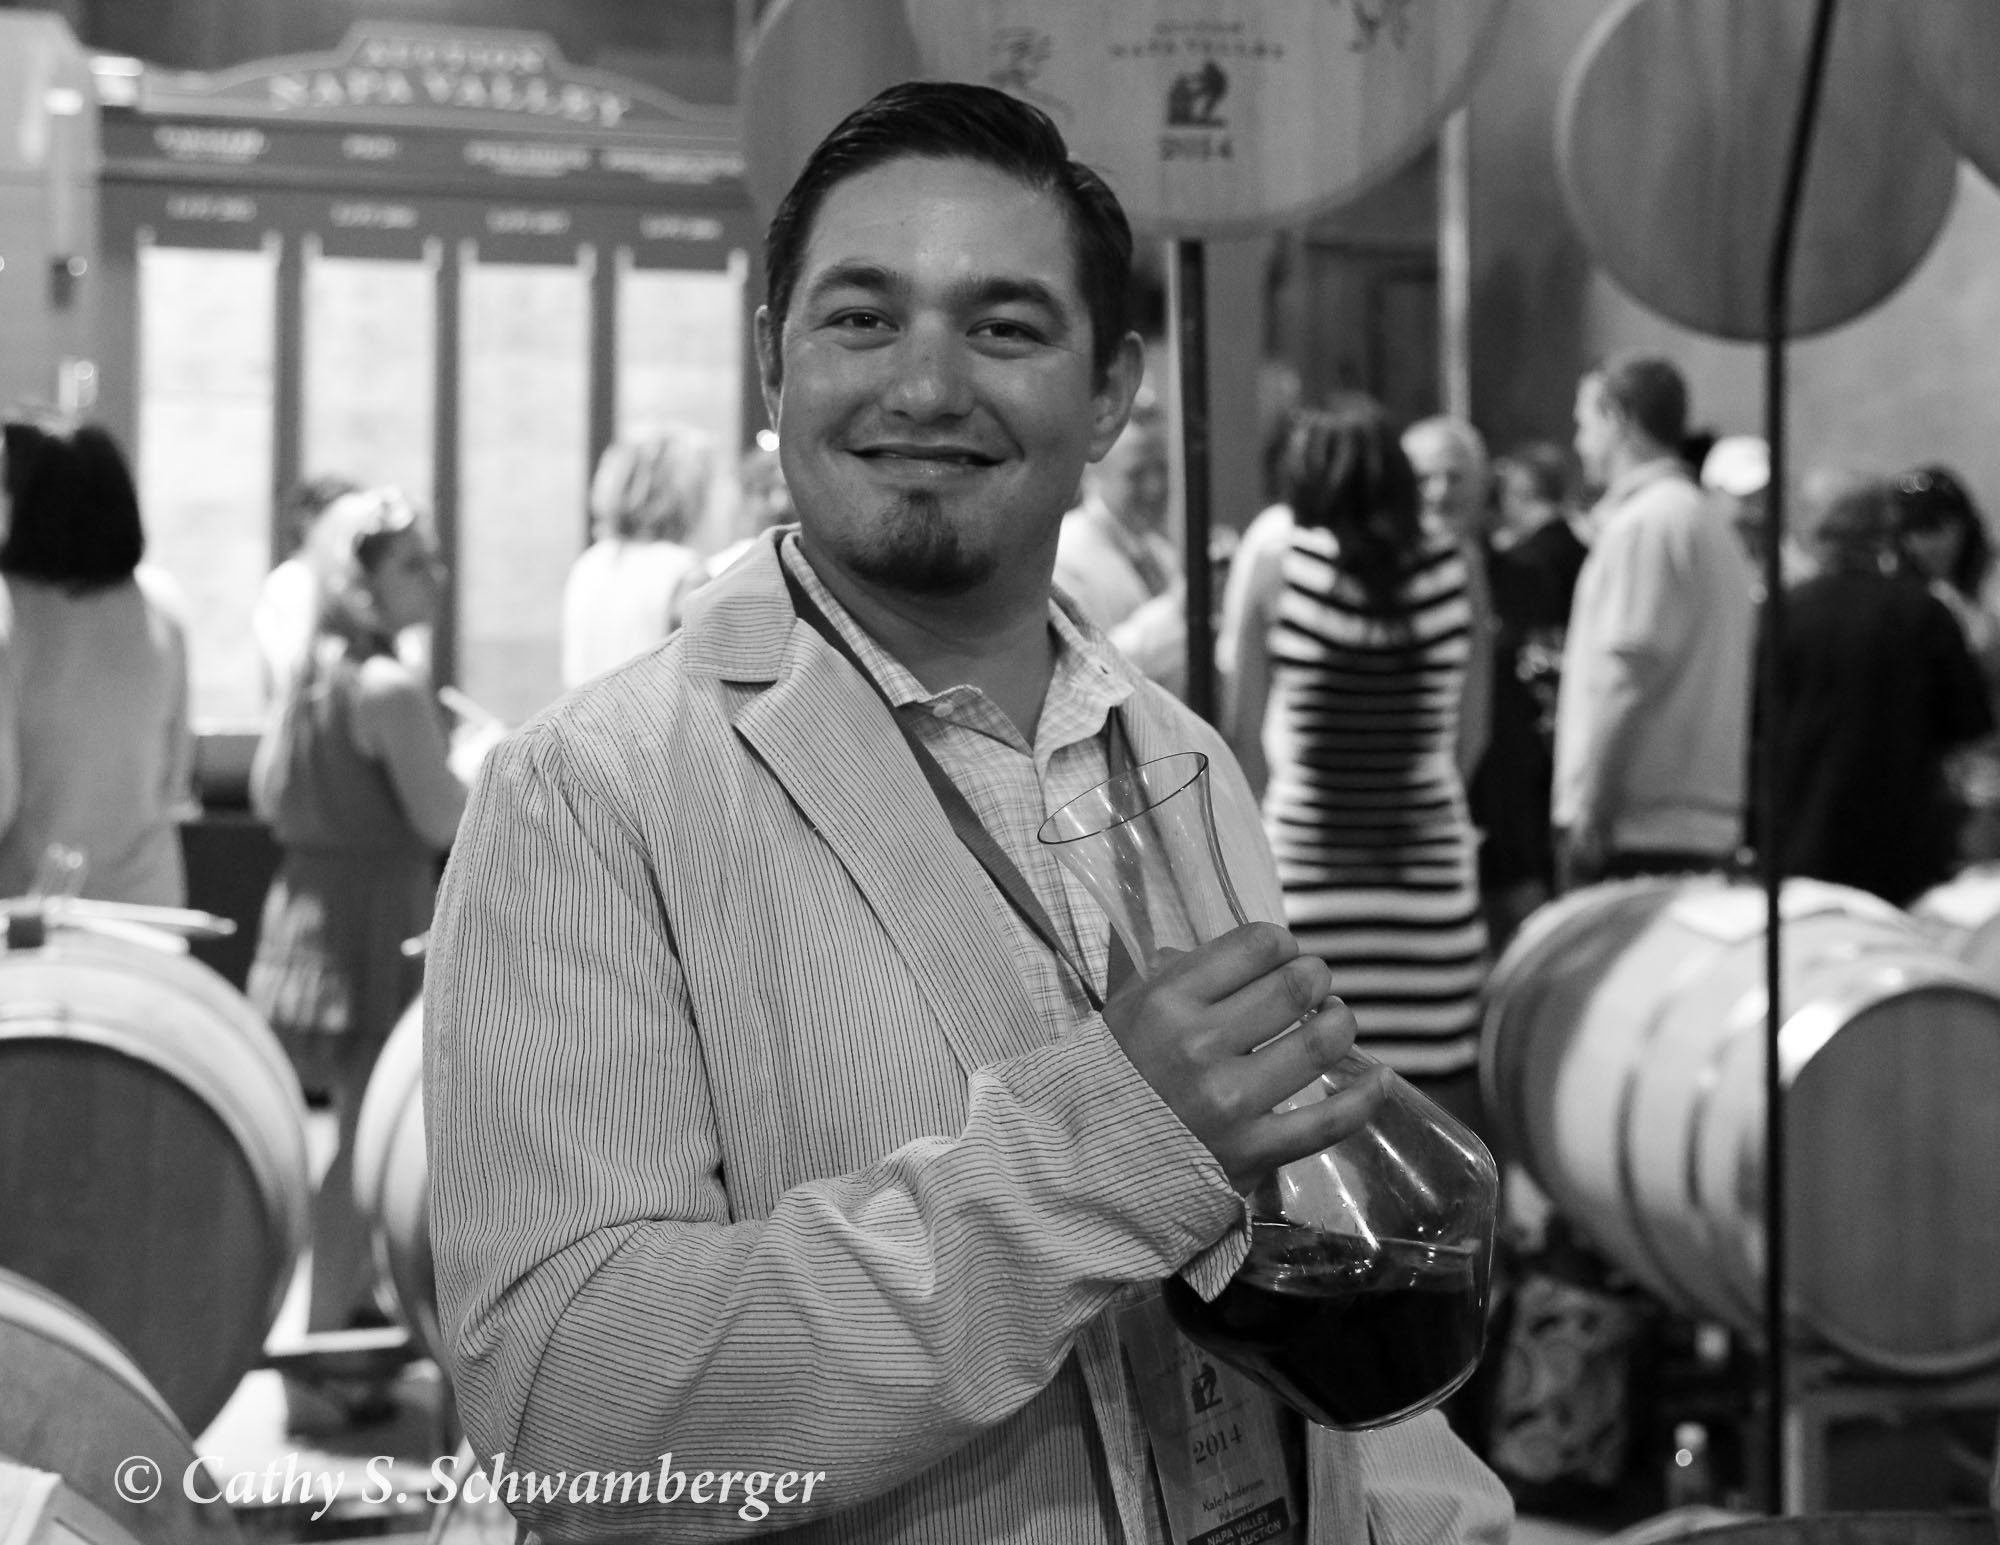 Kale Anderson, winemaker at Pahlmeyer Wines